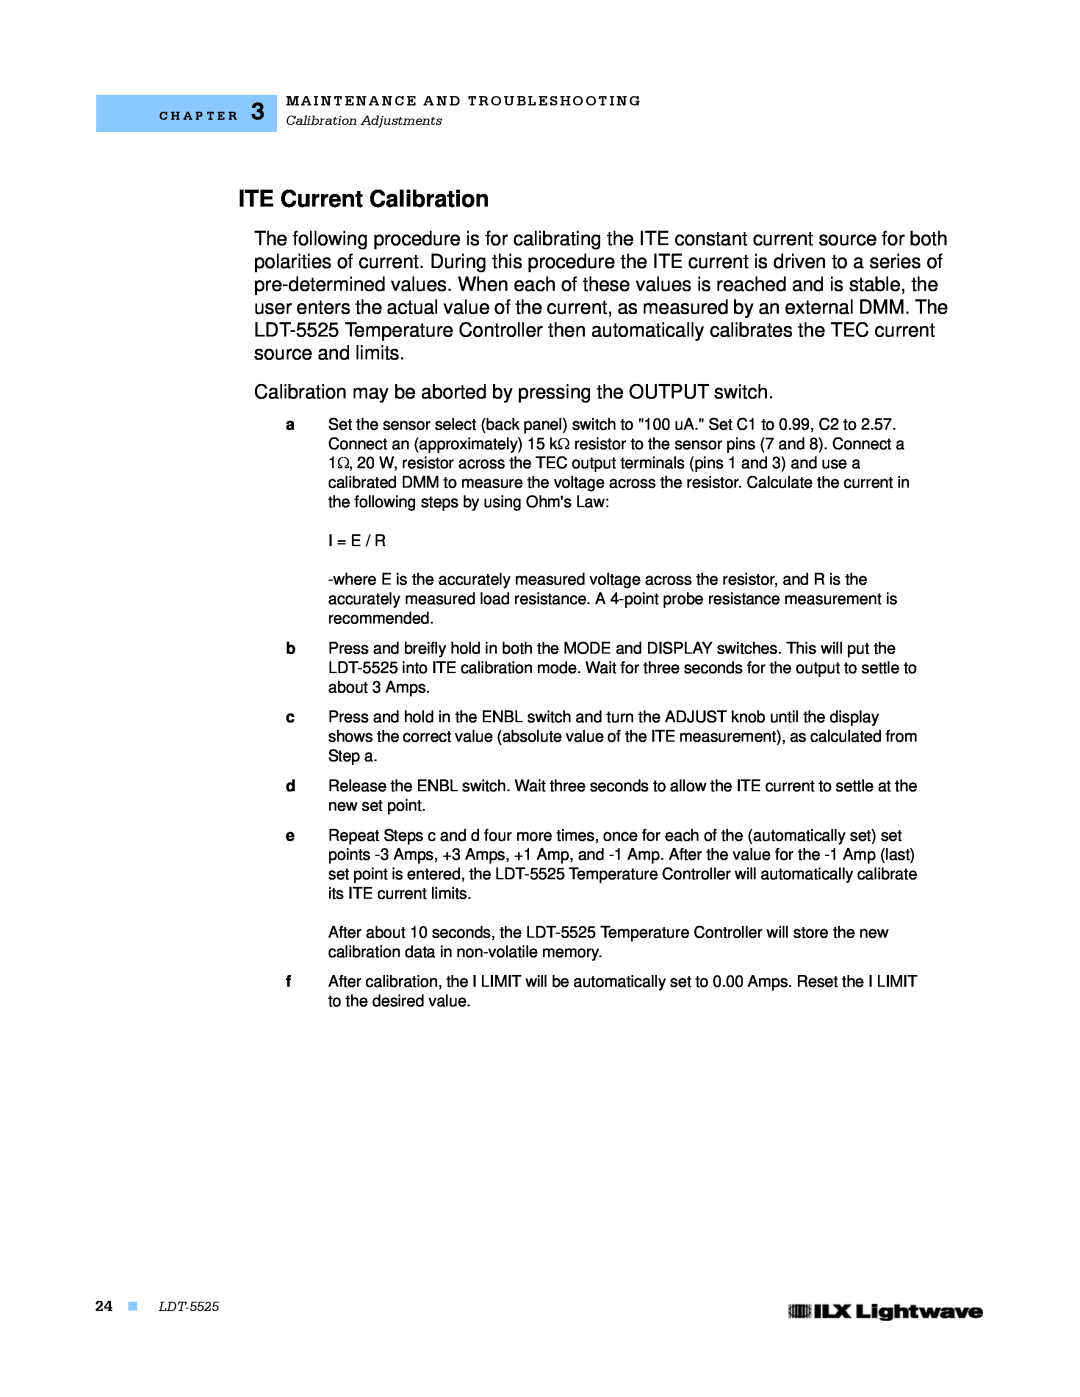 Lightwave Communications LDT-5525 manual ITE Current Calibration 